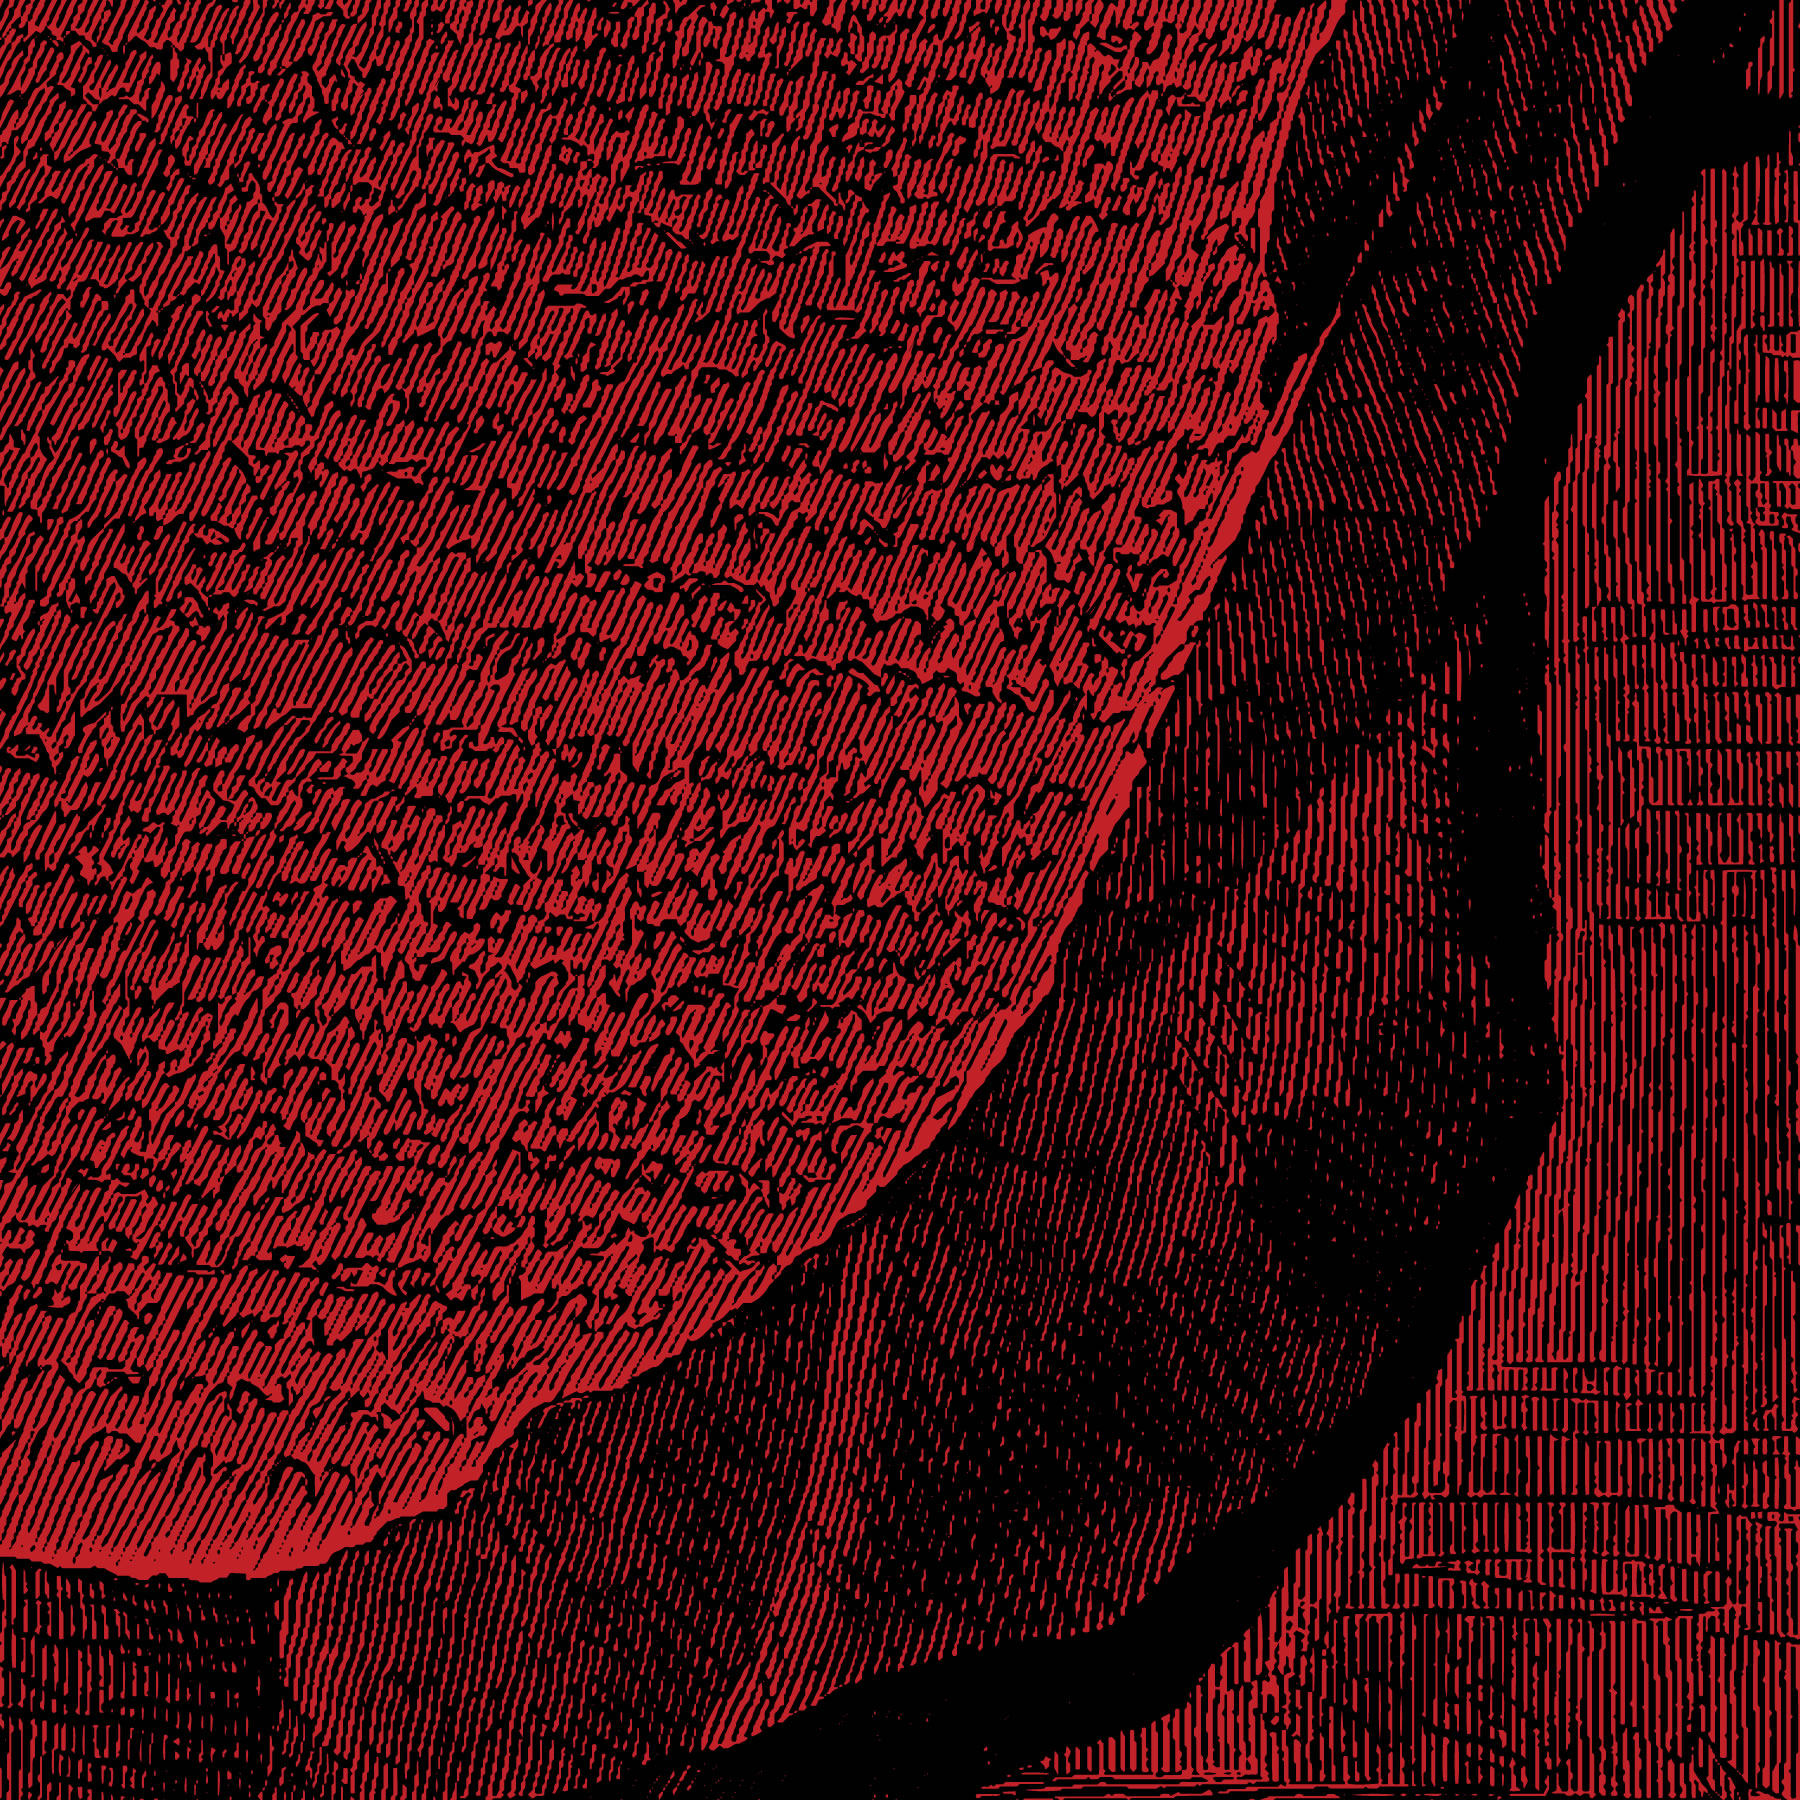 Rosetta Stone illustrator